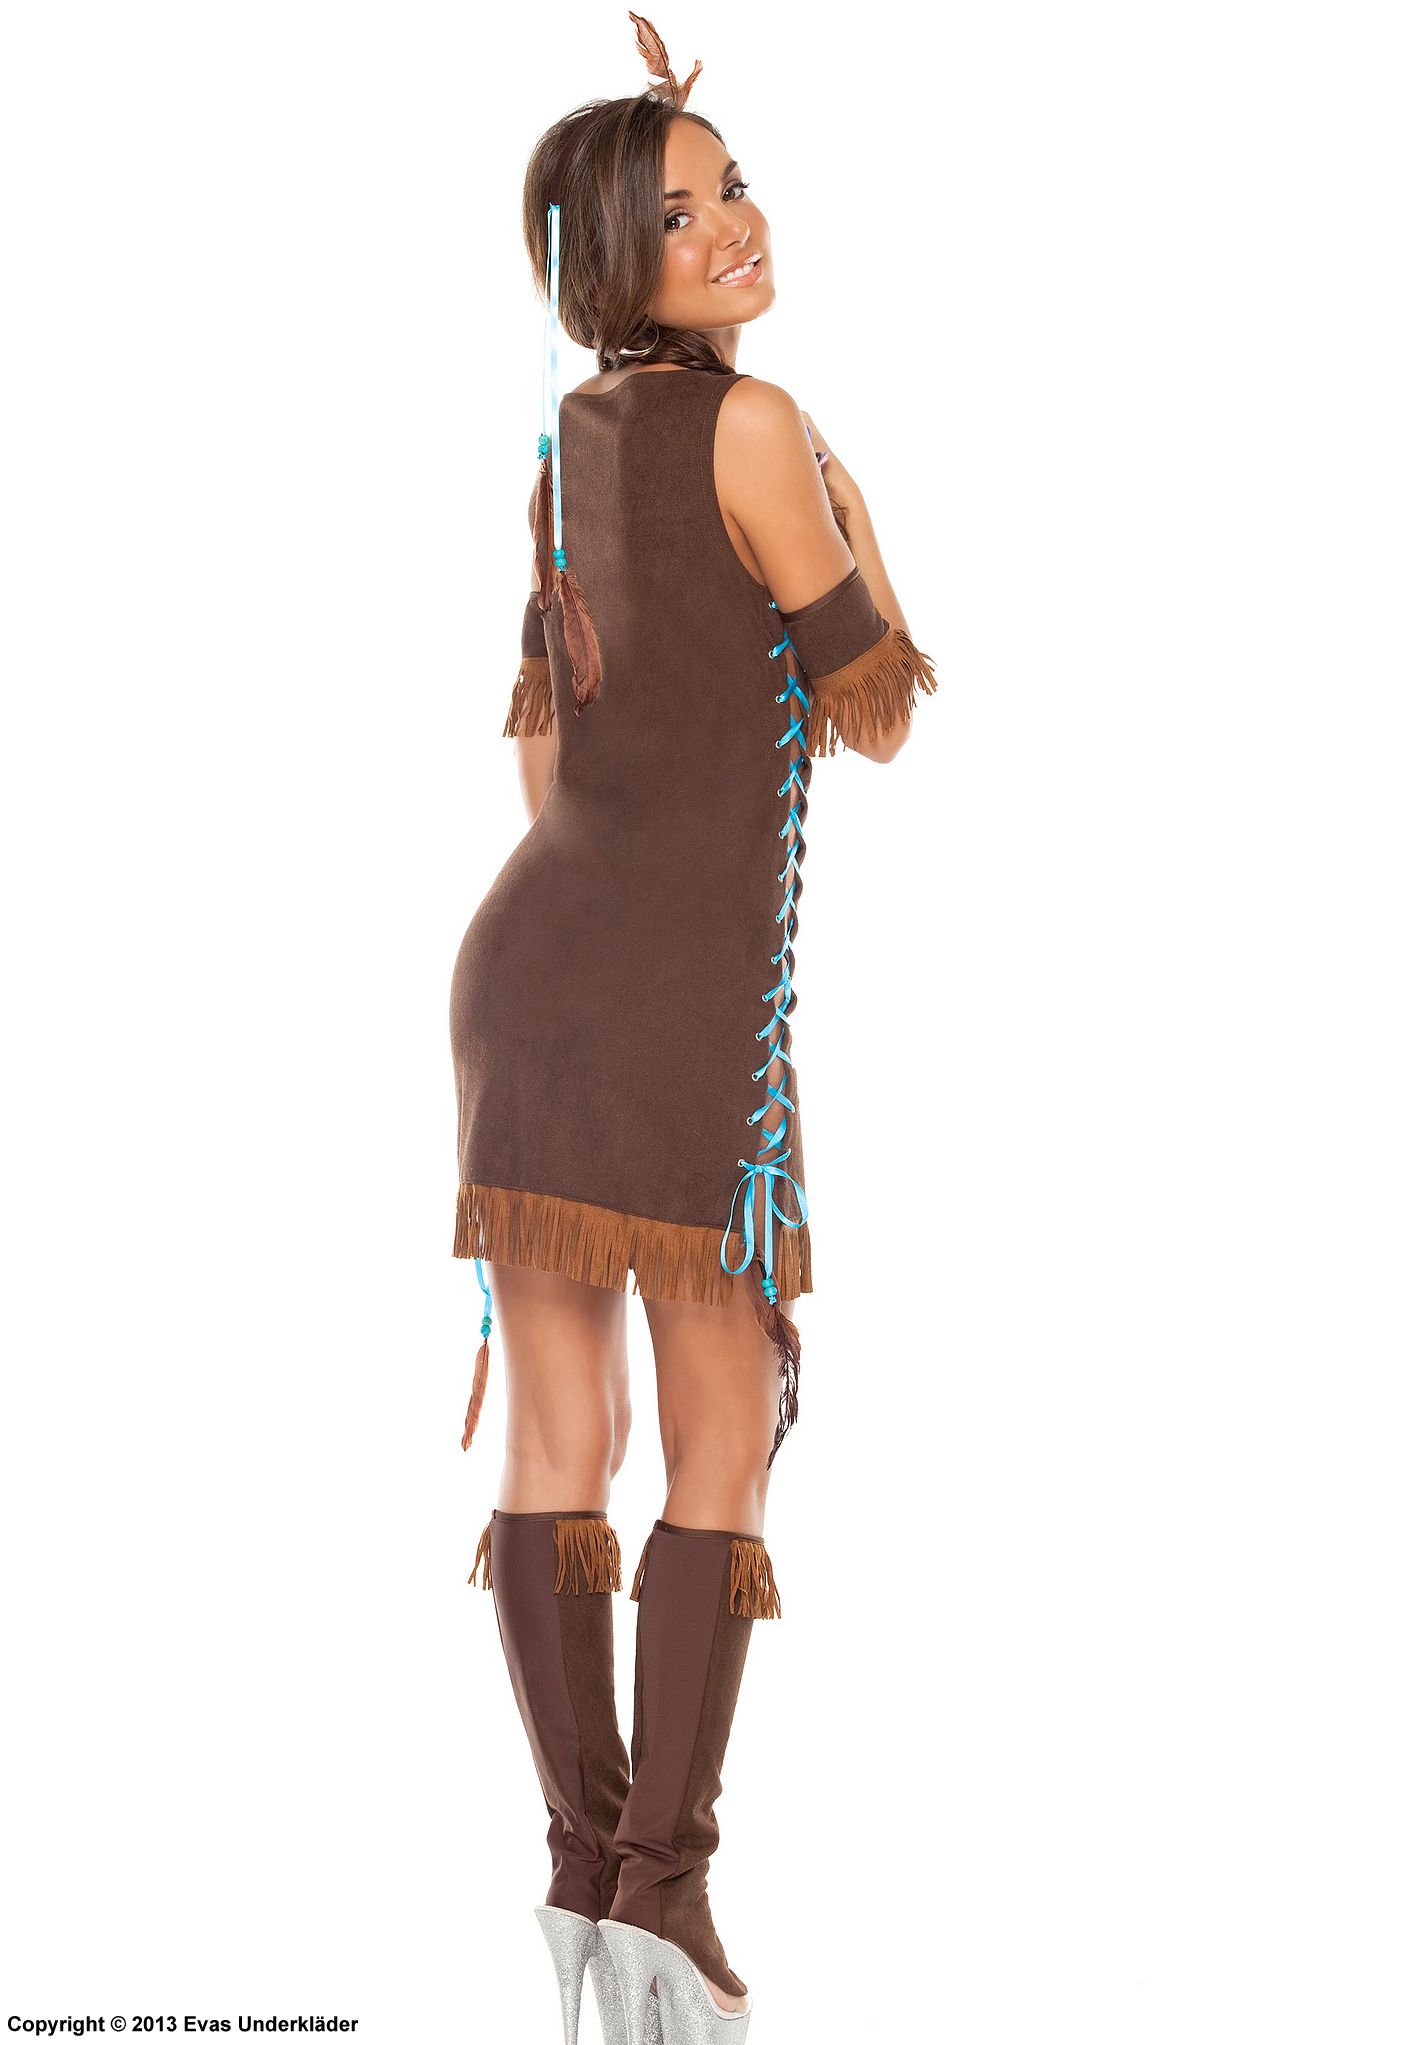 Pocahontas, costume dress, lacing, fringes, beads